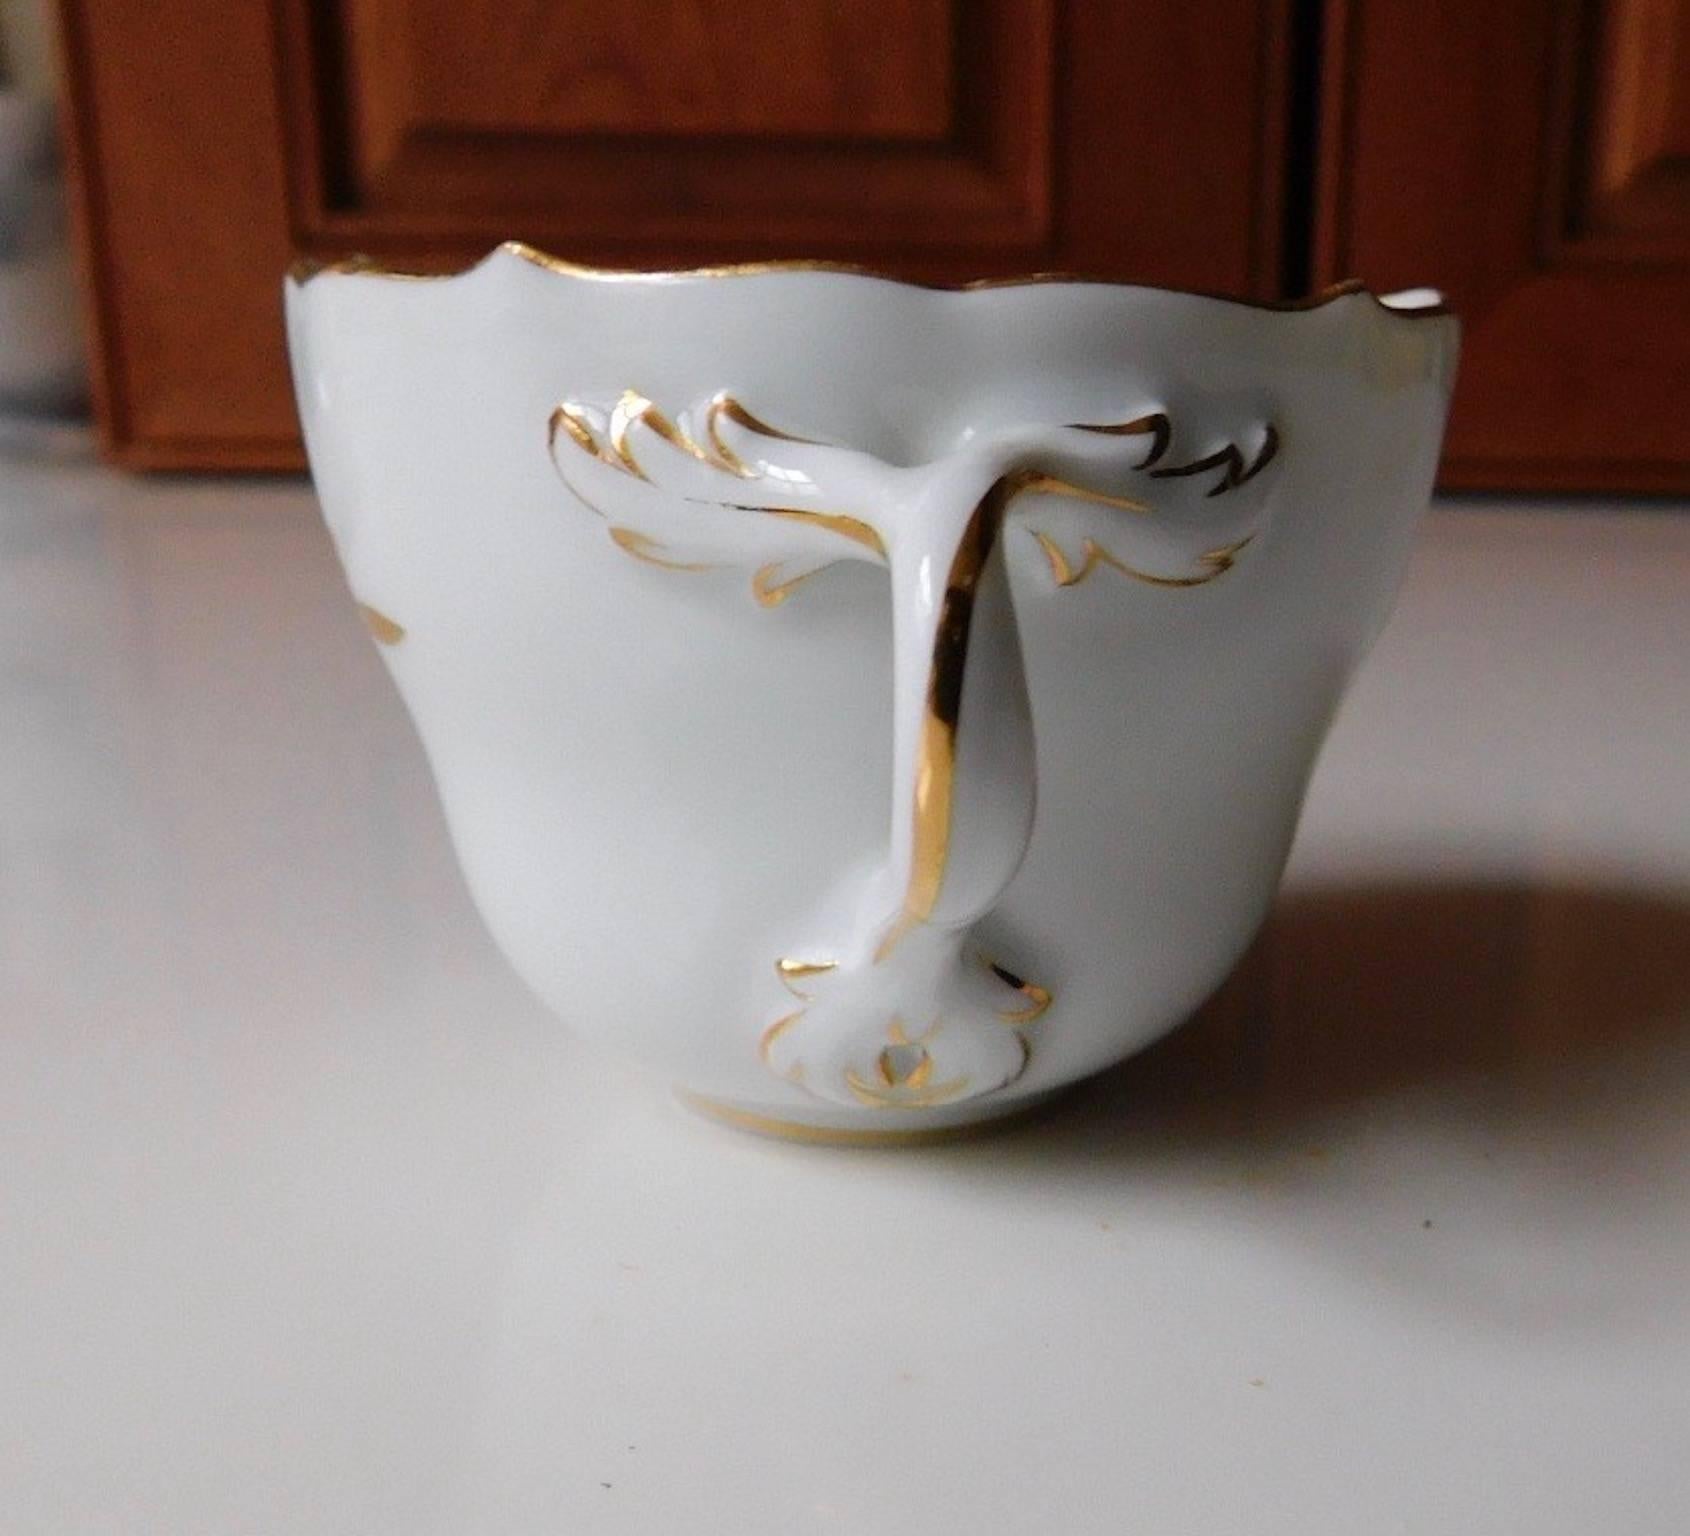 19th Century Meissen Porcelain Golden Dragon Teacup and Saucer